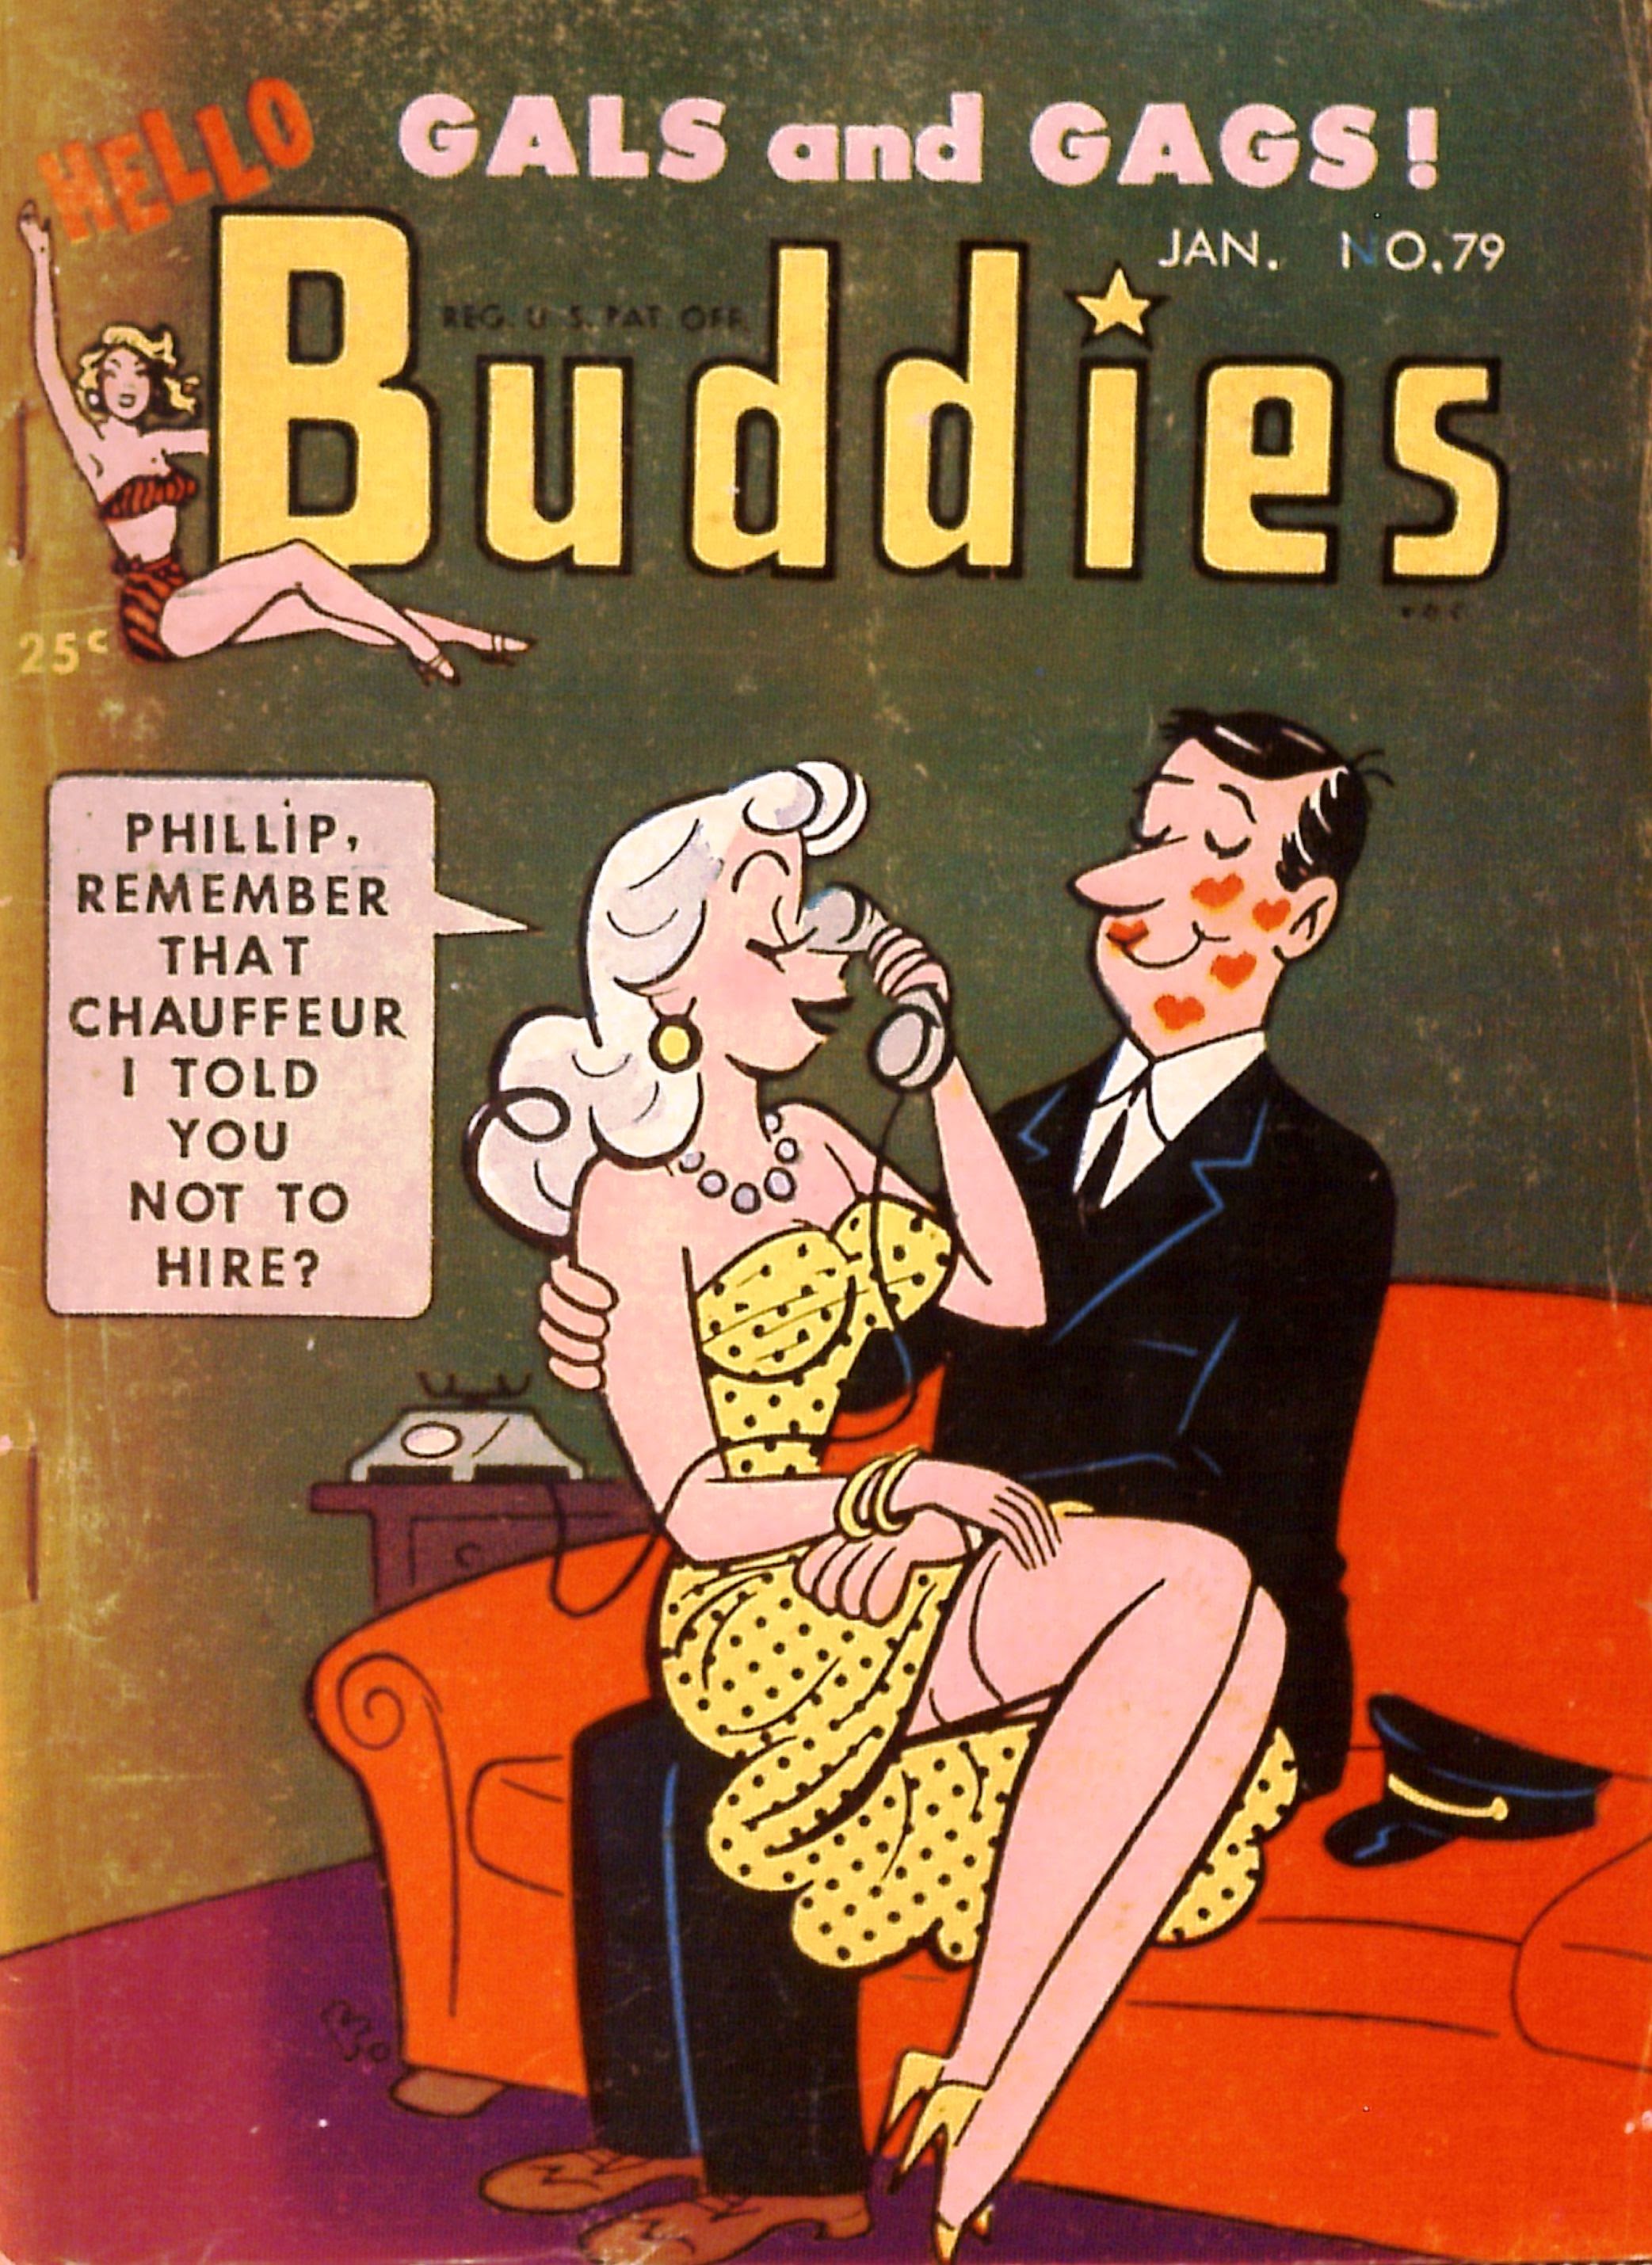 Read online Hello Buddies comic -  Issue #79 - 1